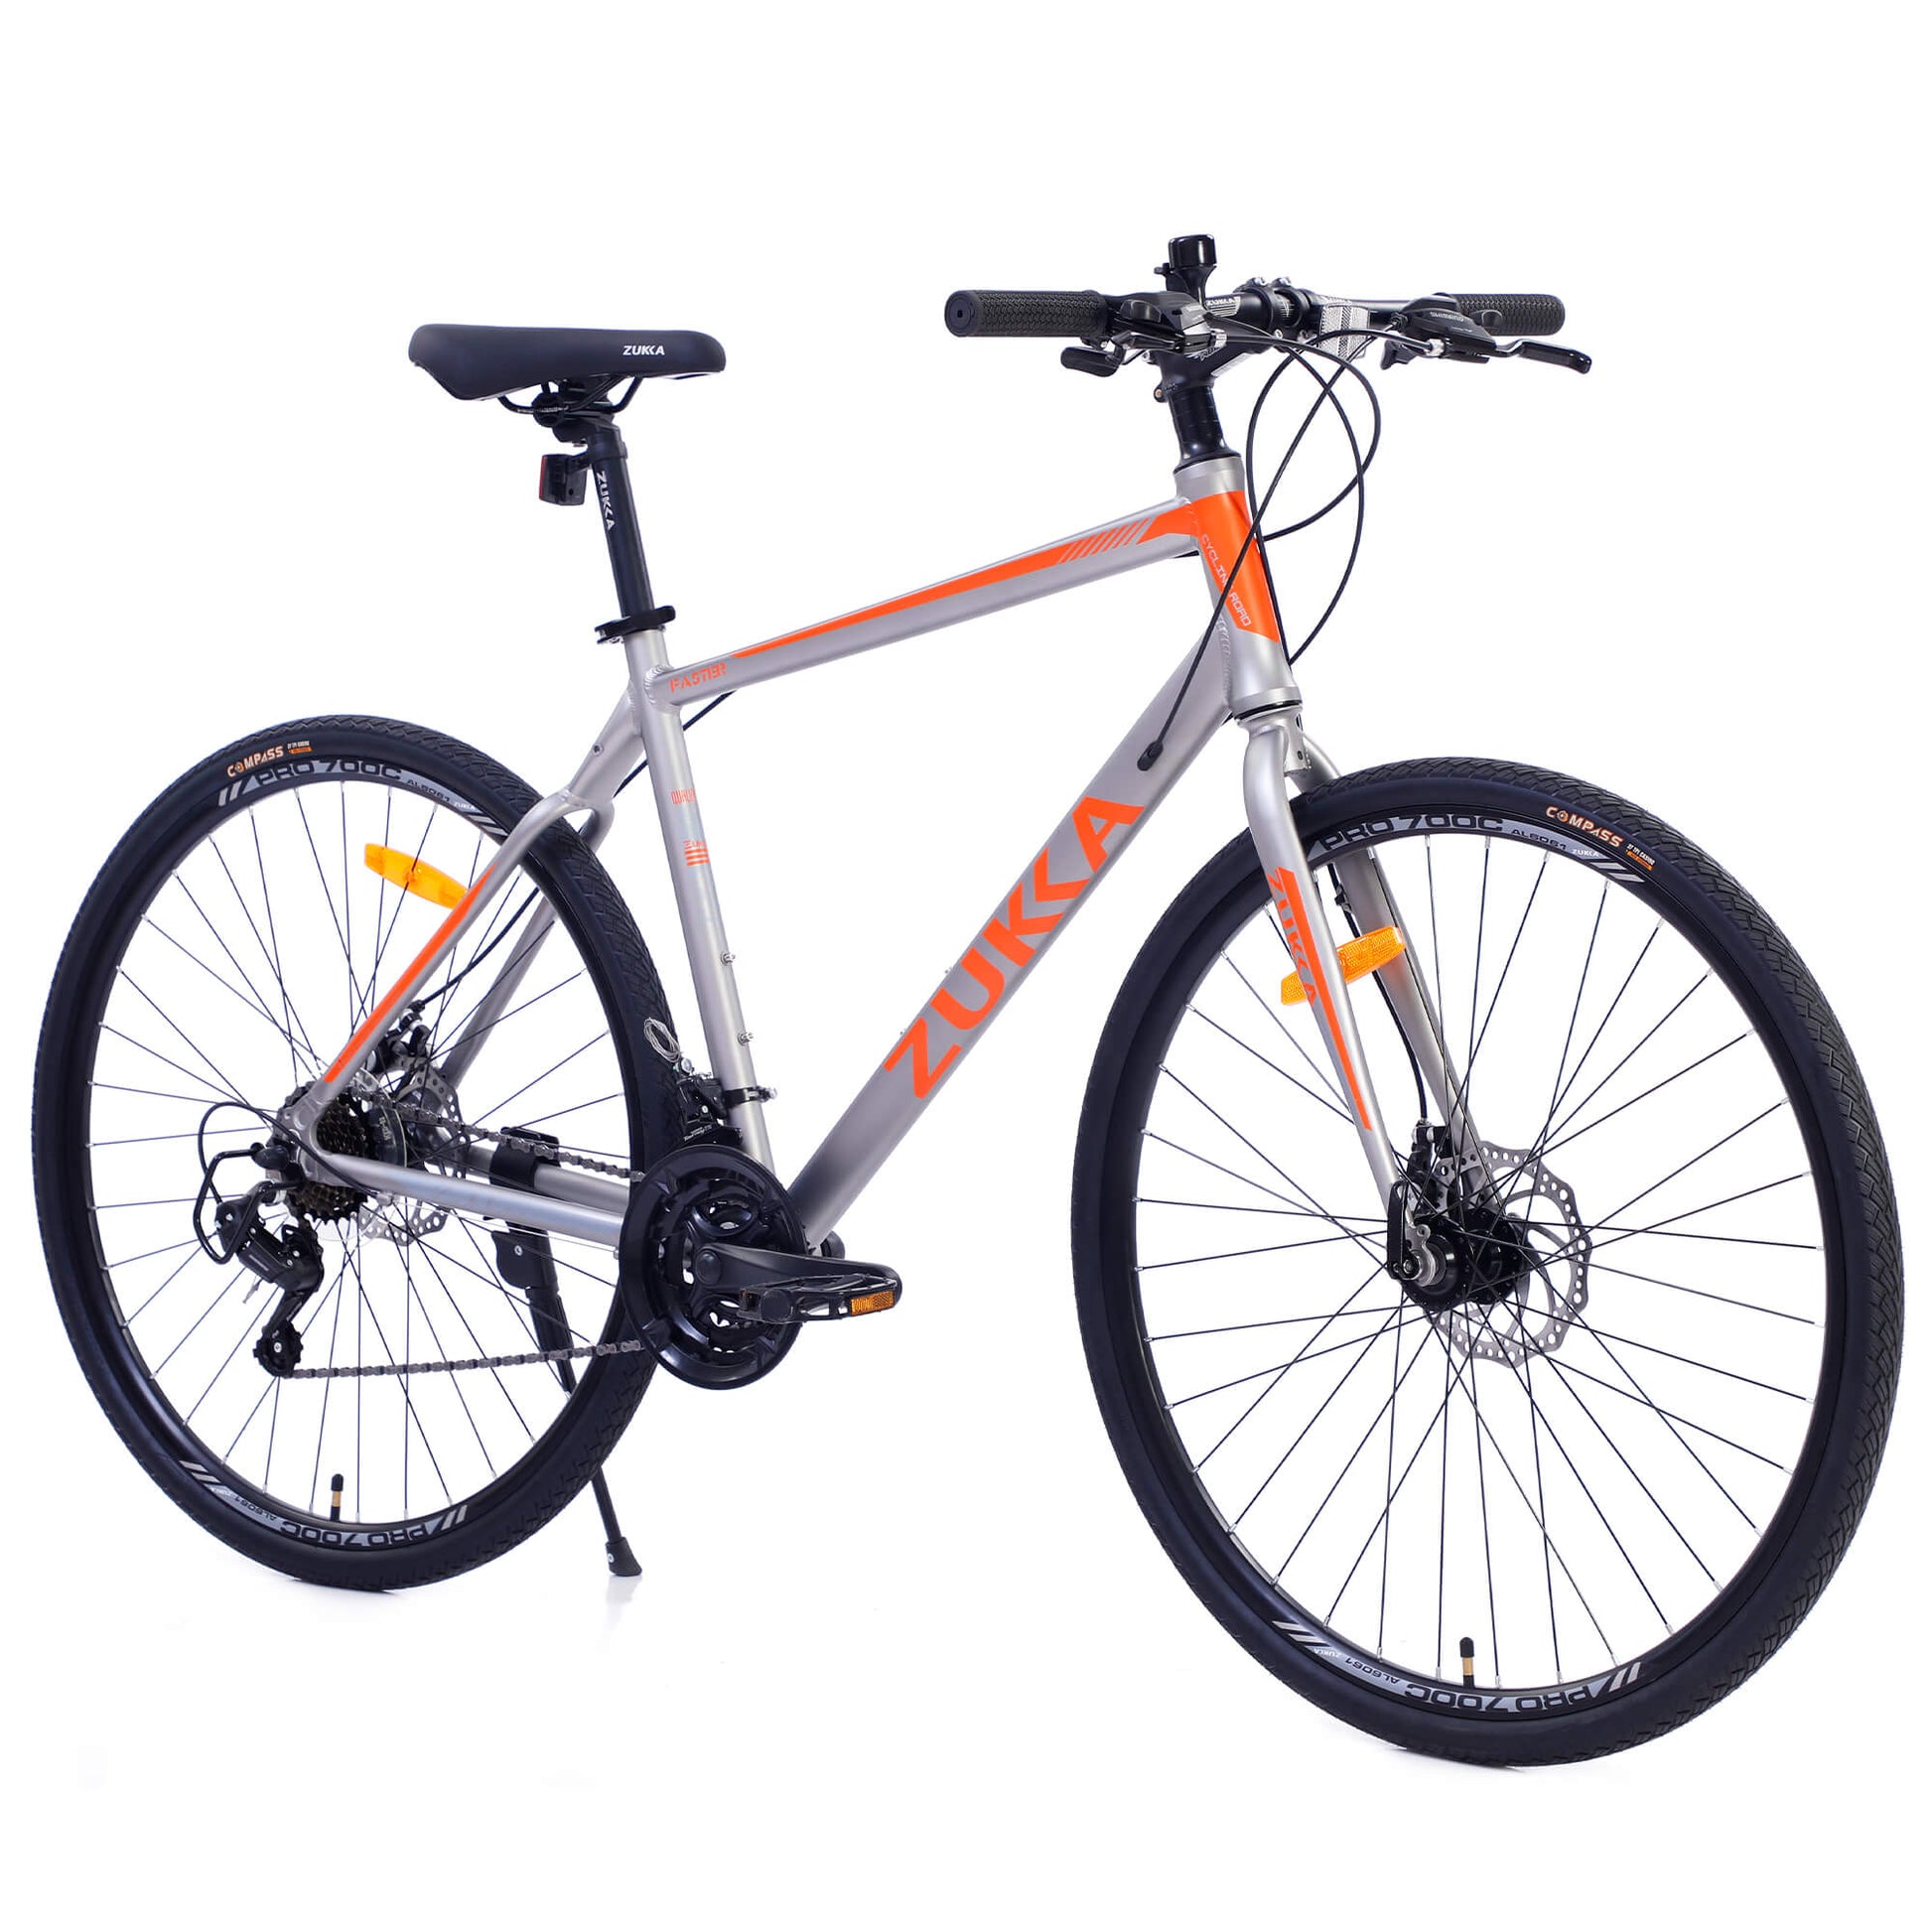  Zukka Seagull 700C 21-Speed Hybrid Road Bike - Grey Orange